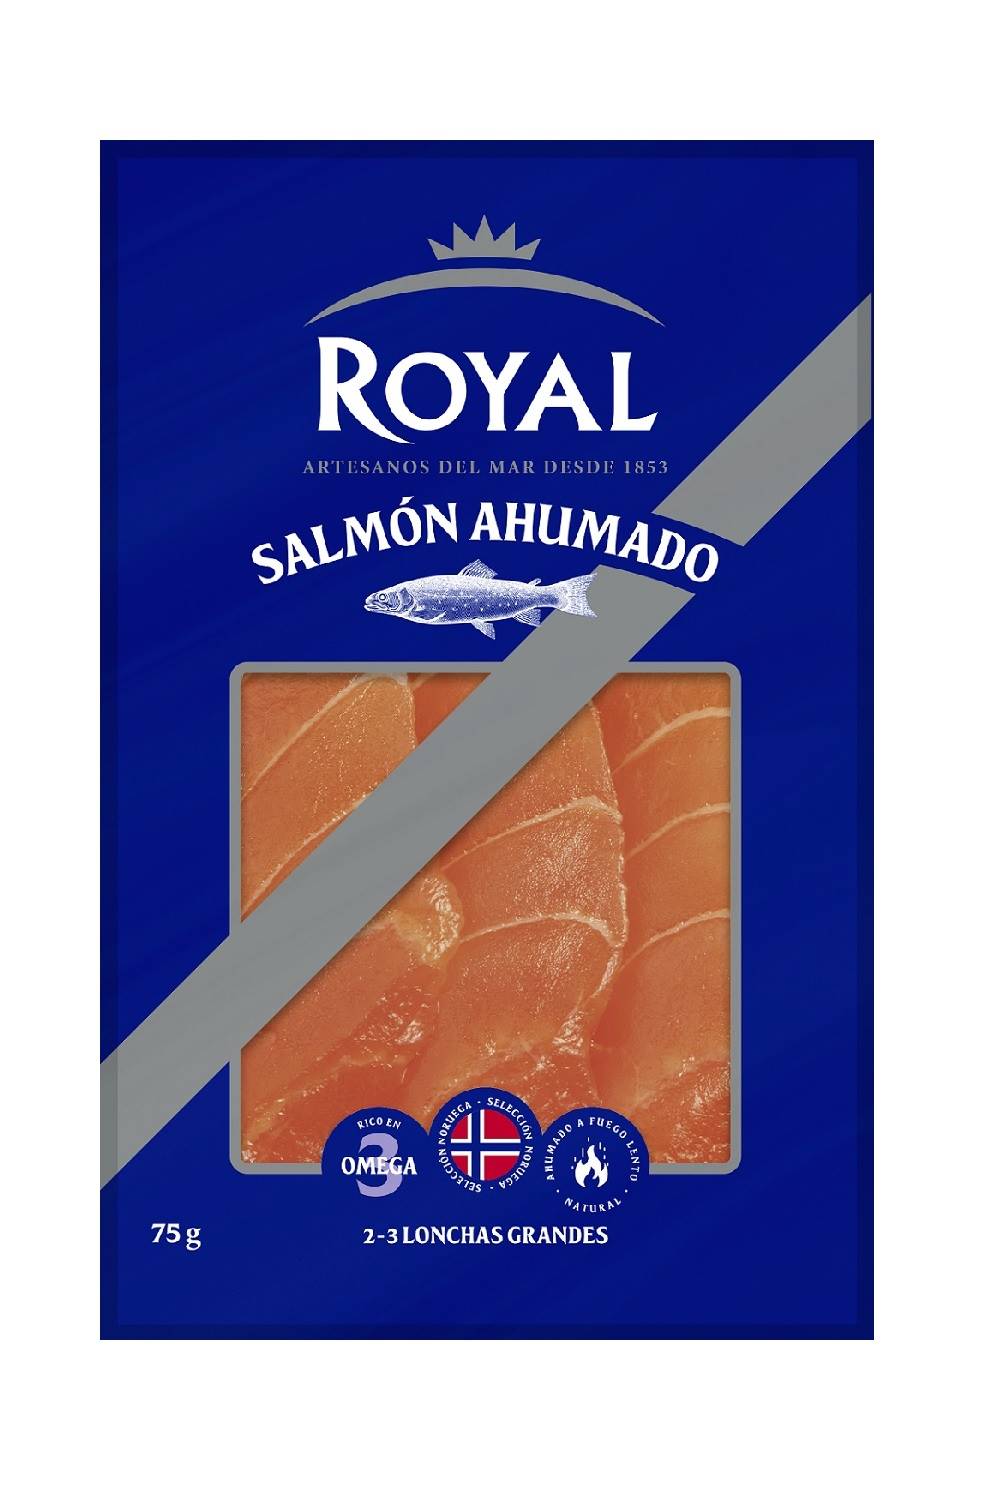 premios Clara producto tradicional salmon roya